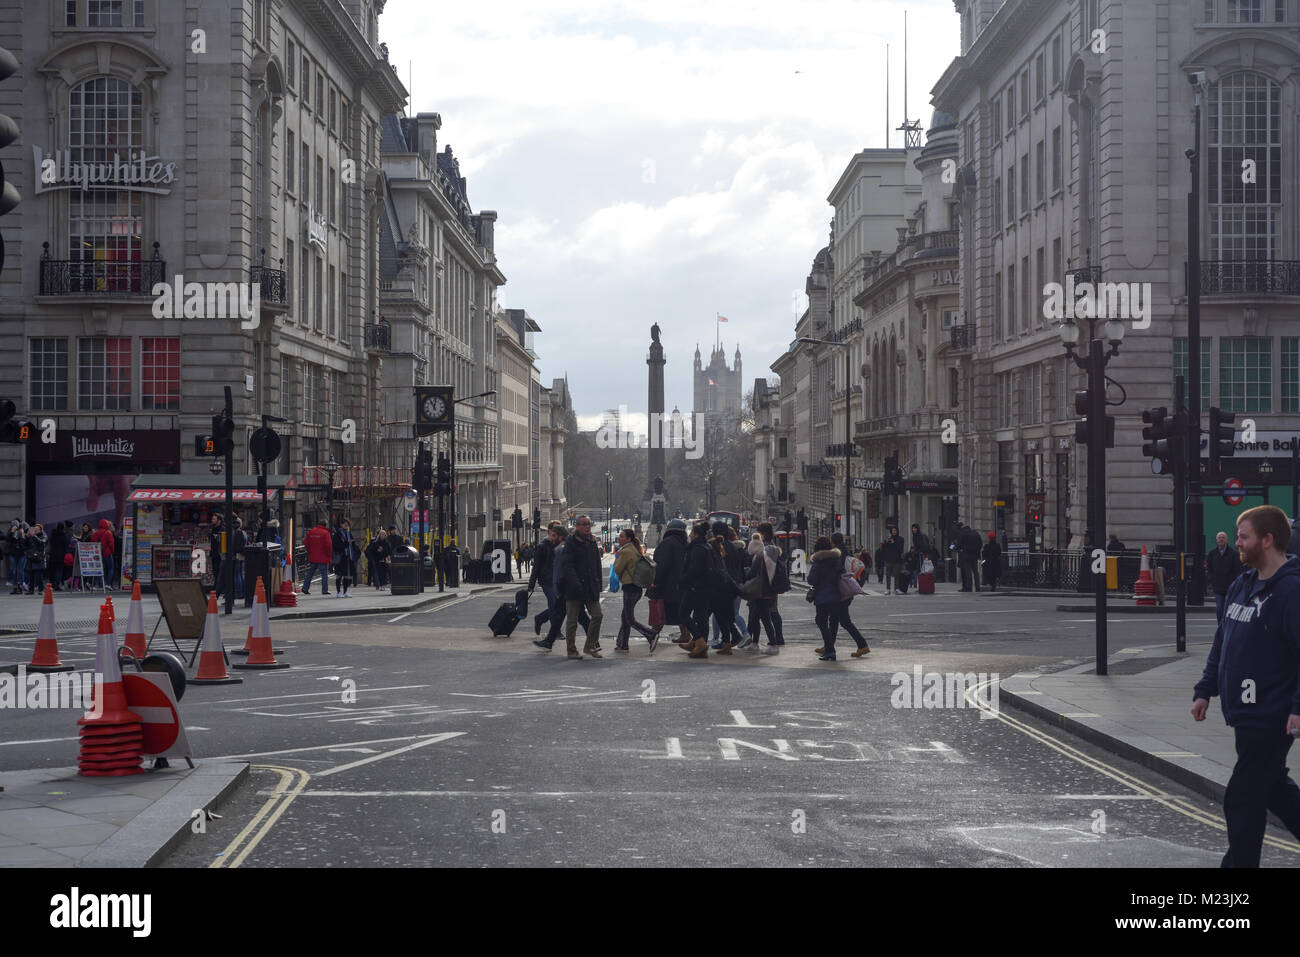 Regents street street view London,UK Stock Photo - Alamy